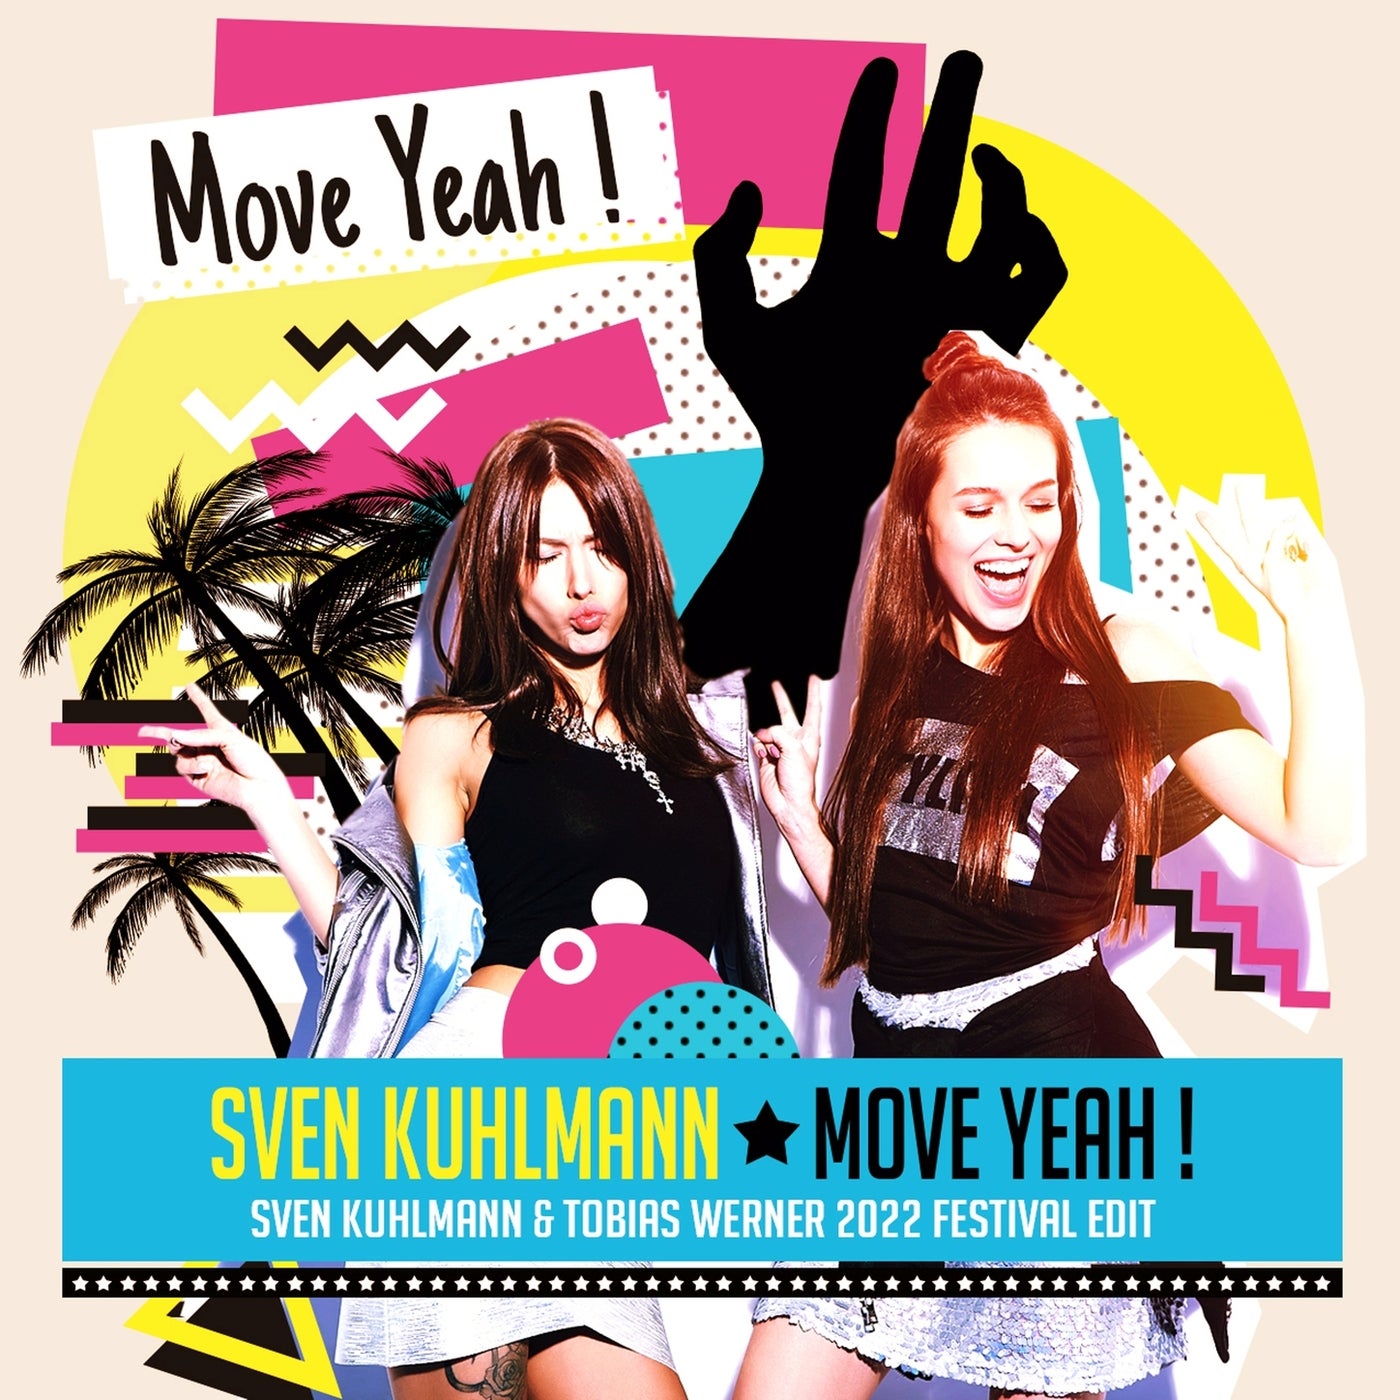 Move Yeah!